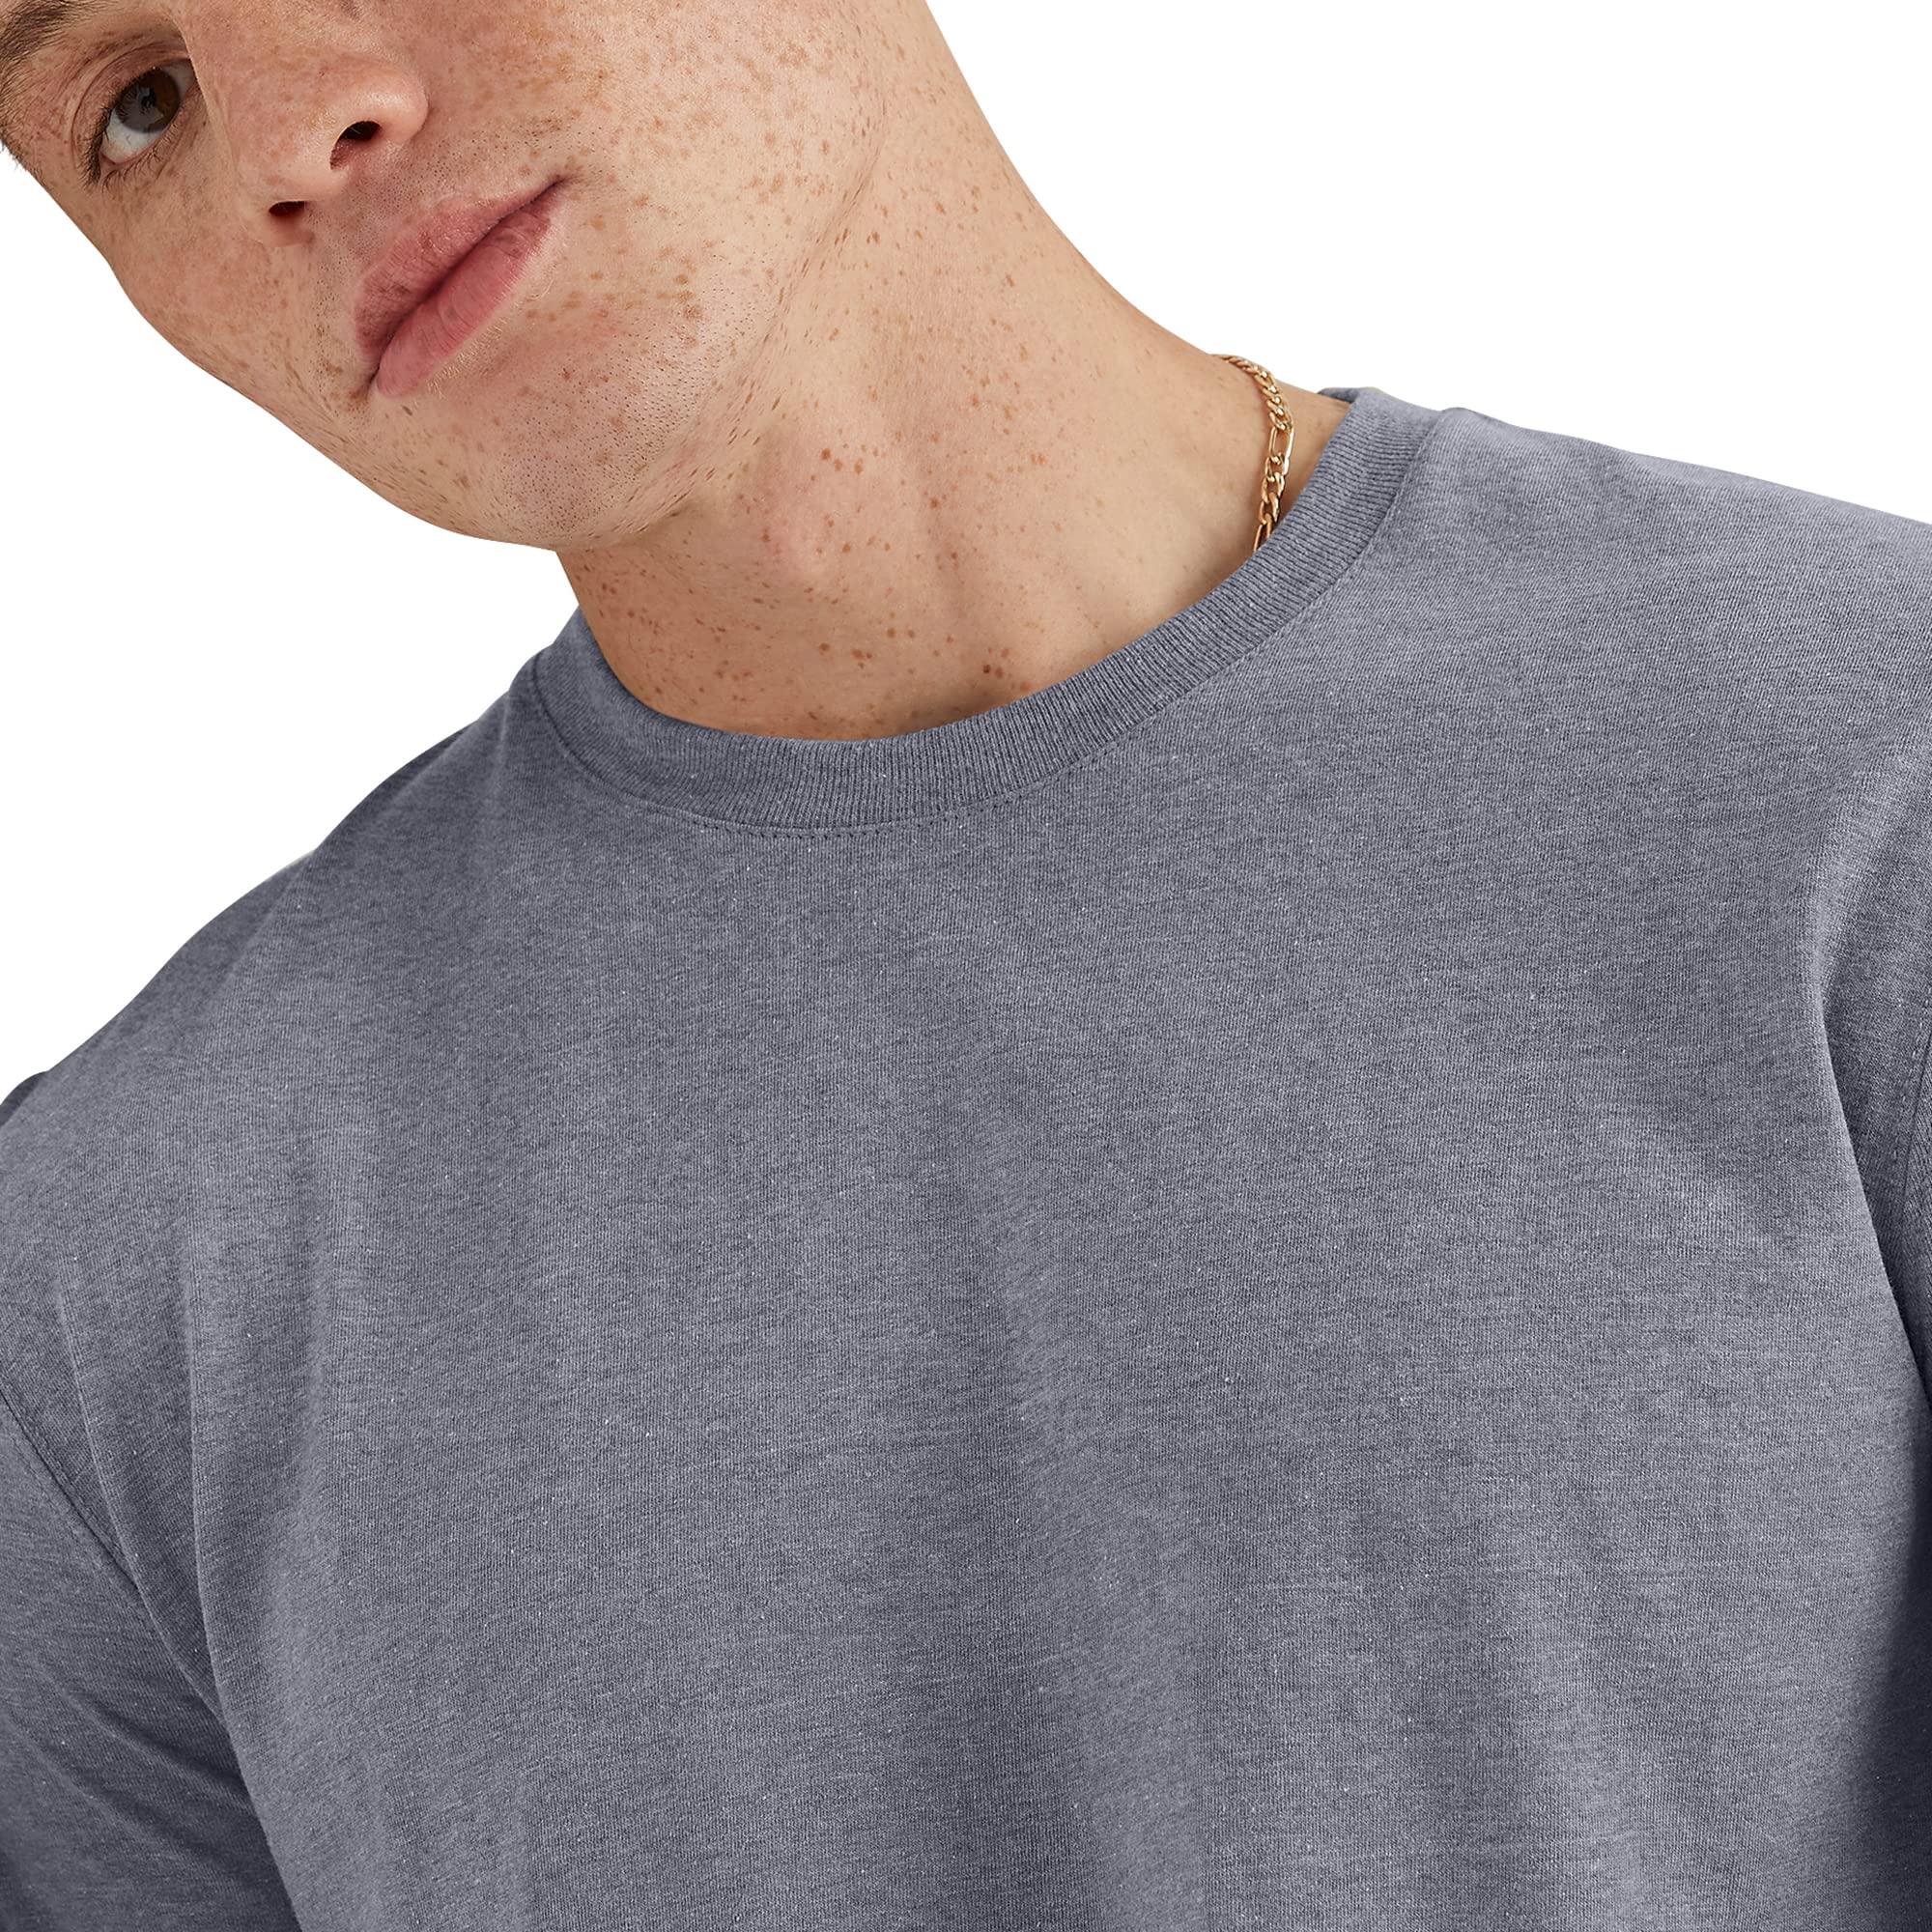 Hanes Men's Originals Long Sleeve T-Shirt, Lightweight Tri-Blend Jersey Tee for Men, Available in Tall